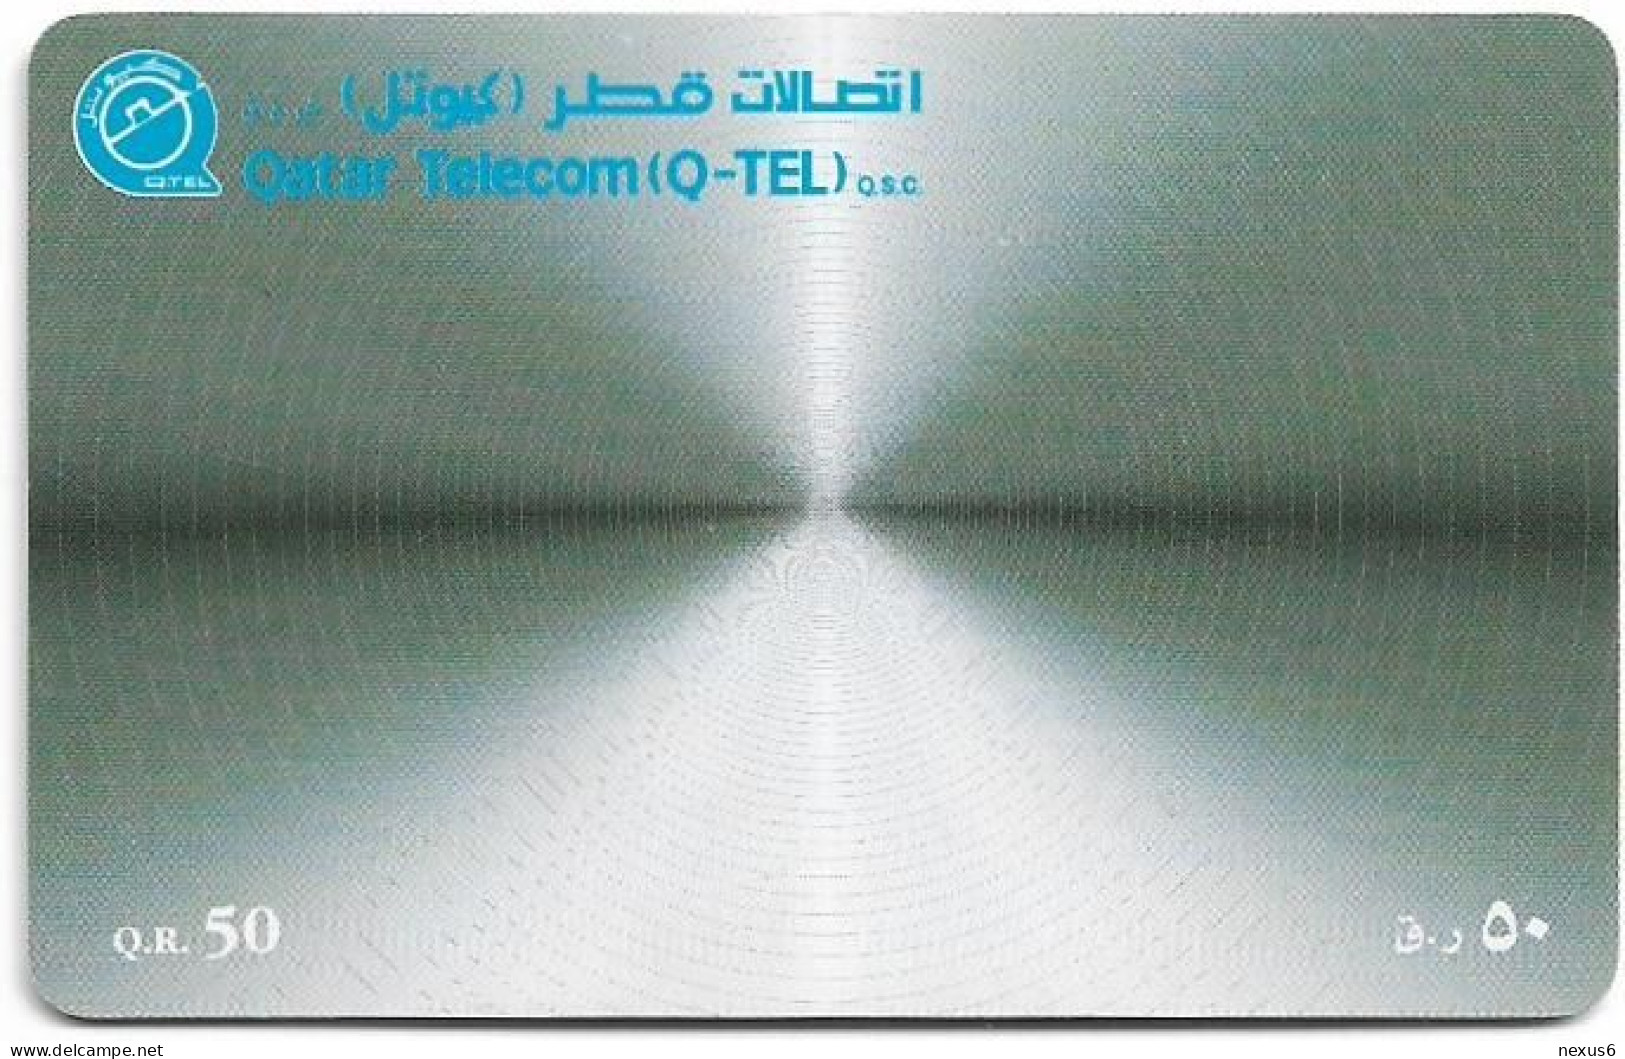 Qatar - Qatar Telecom (Chip) - Abstract Design 2 - Blue Arrow, 2002, 50QR, Used - Qatar